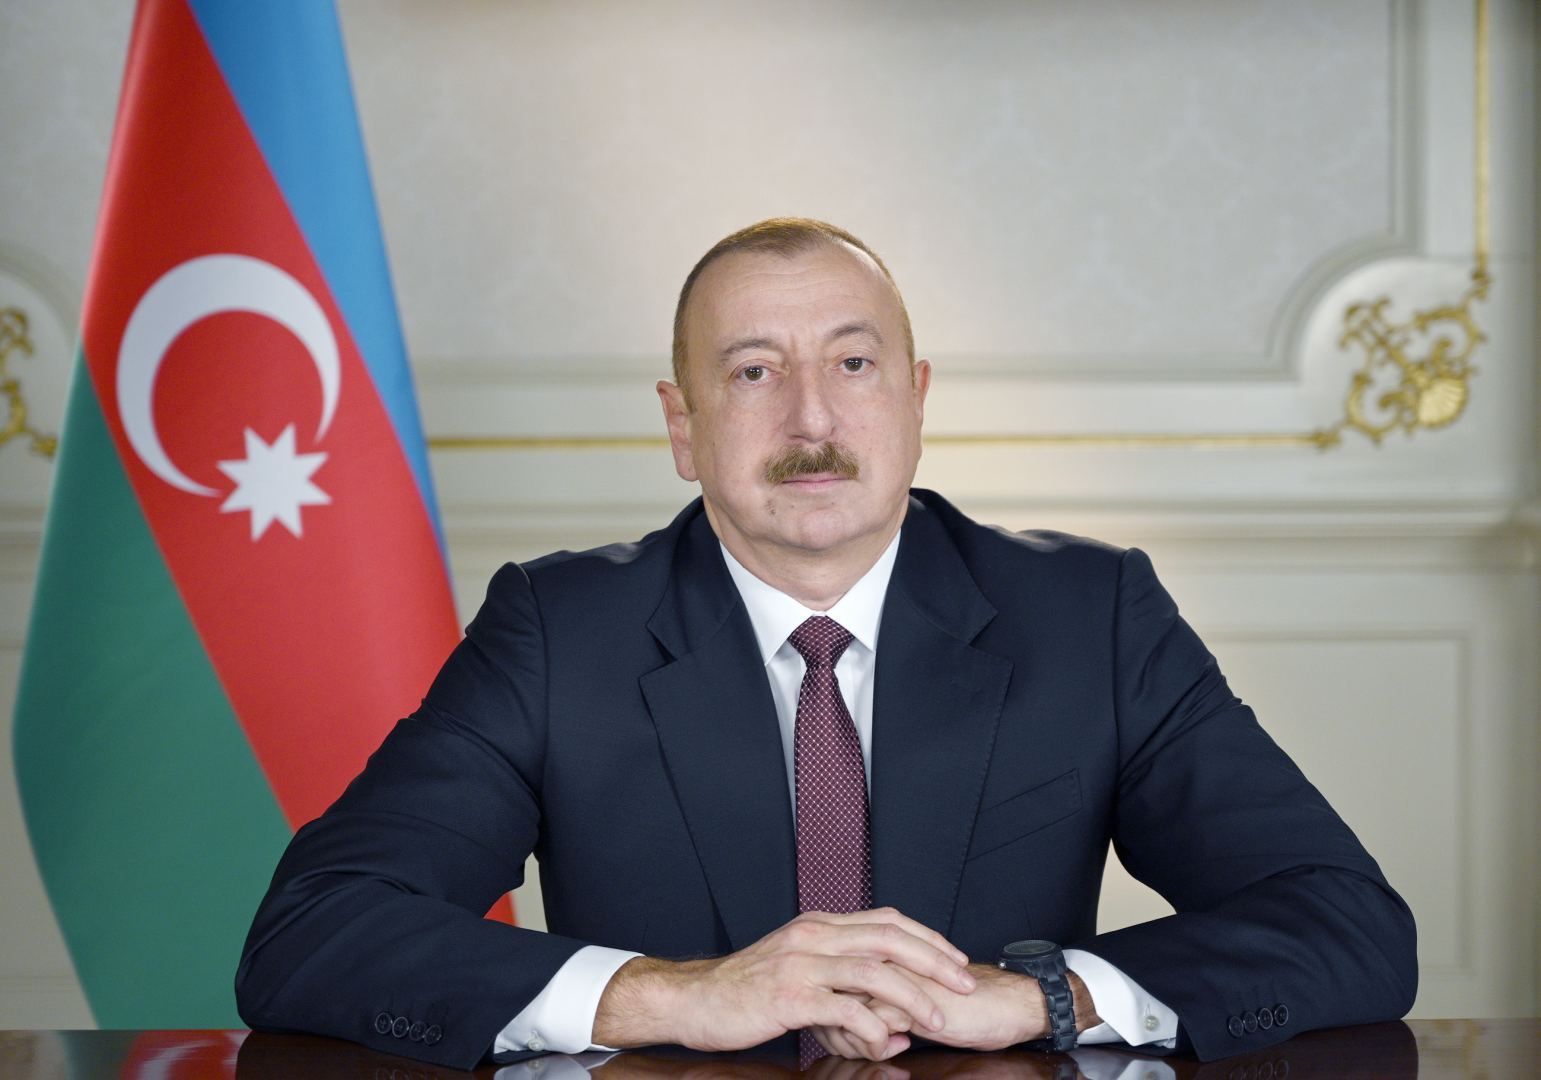 Amendments made to Azerbaijan's Code of Administrative Offences